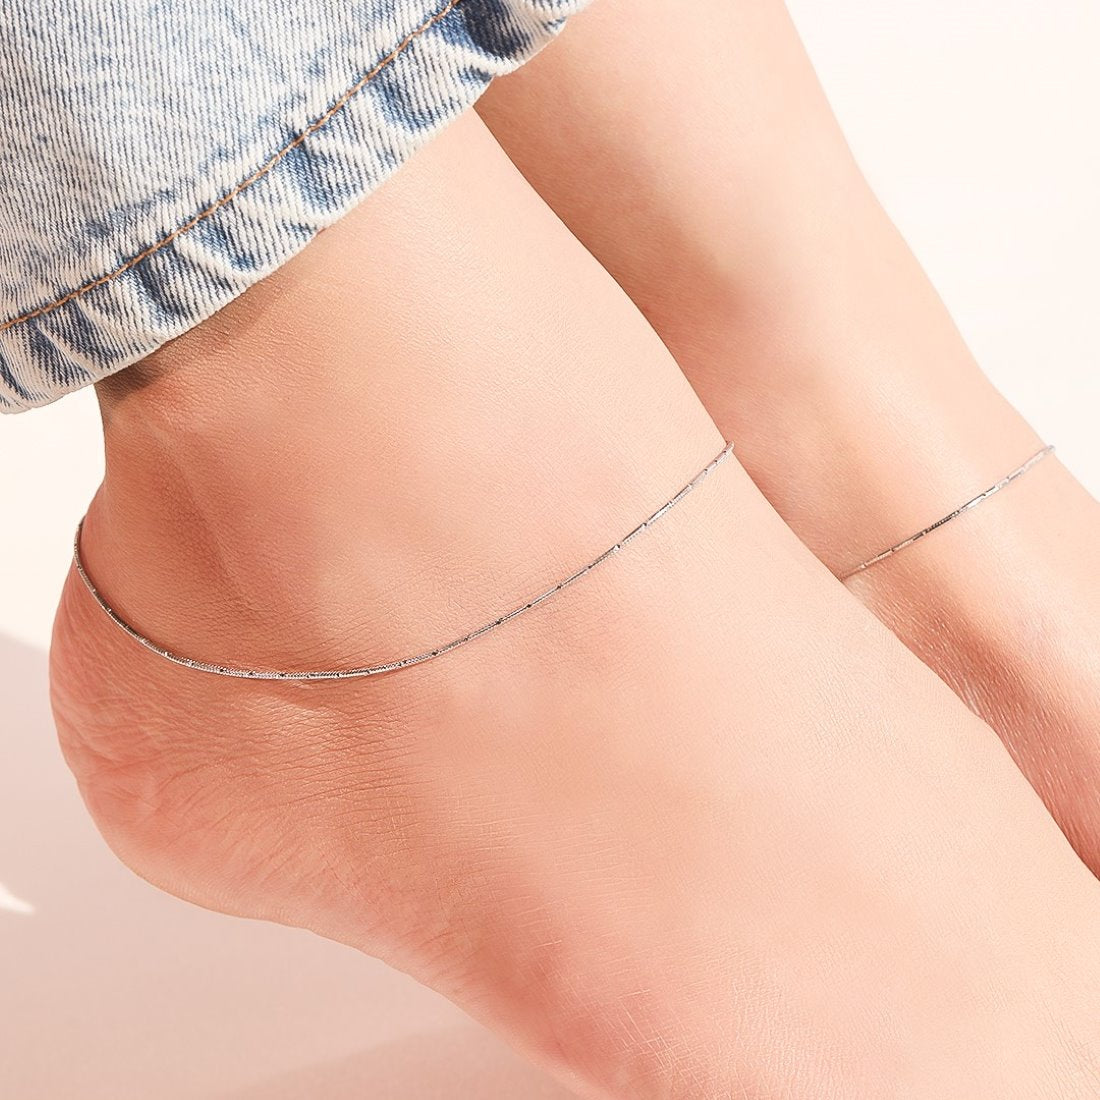 Sleek Minimal Chain 925 Sterling Silver Anklet